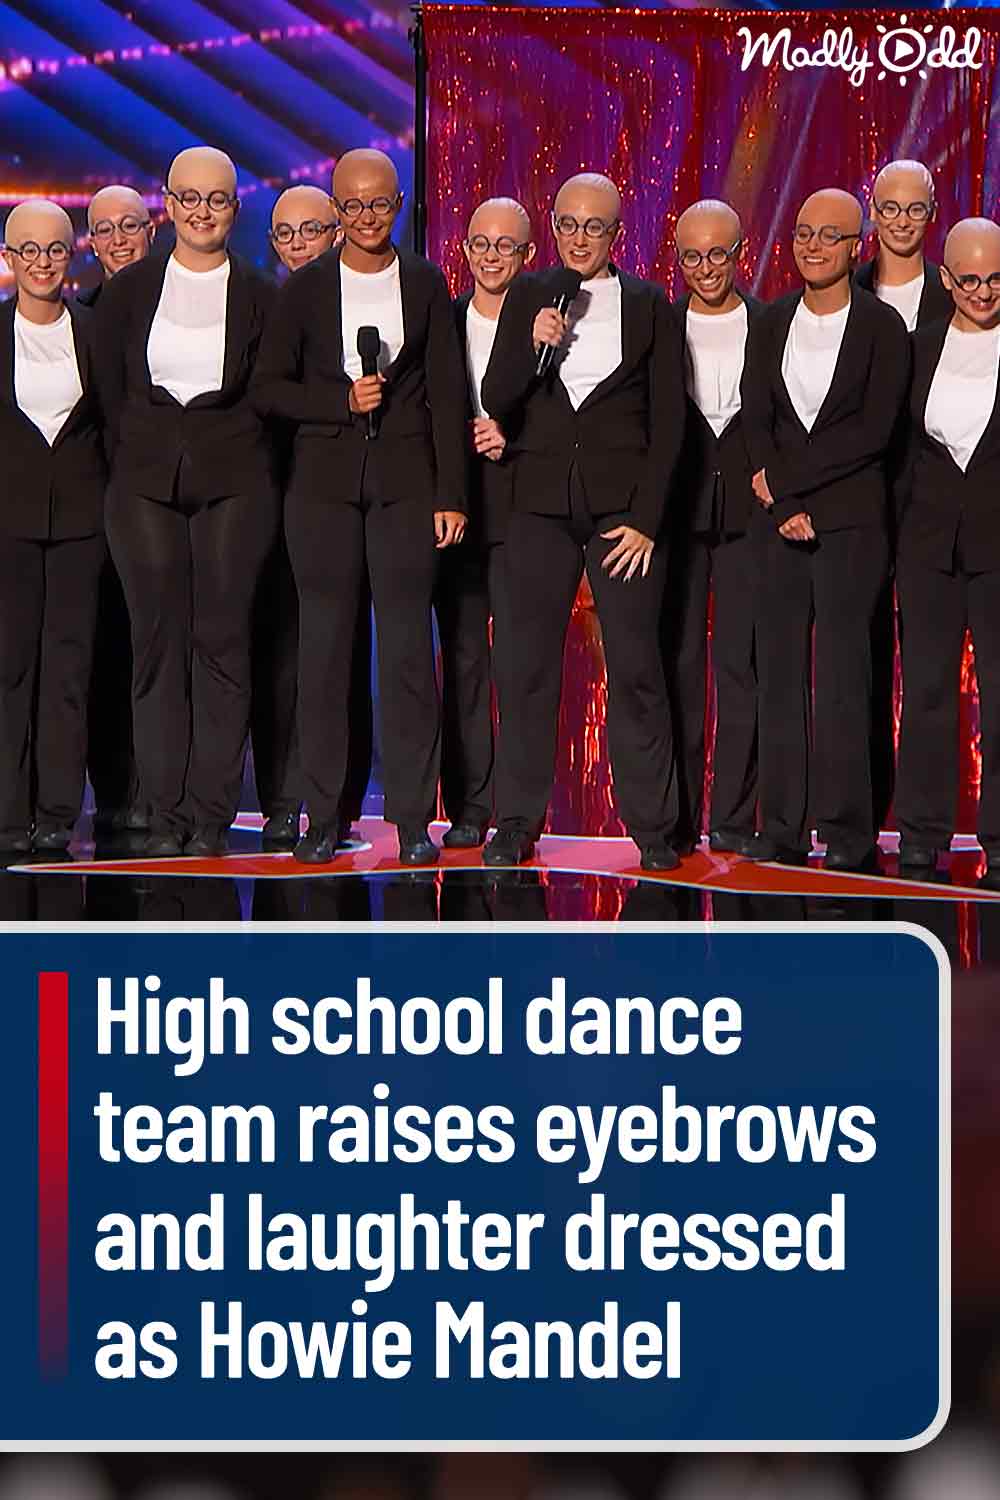 High school dance team raises eyebrows and laughter dressed as Howie Mandel